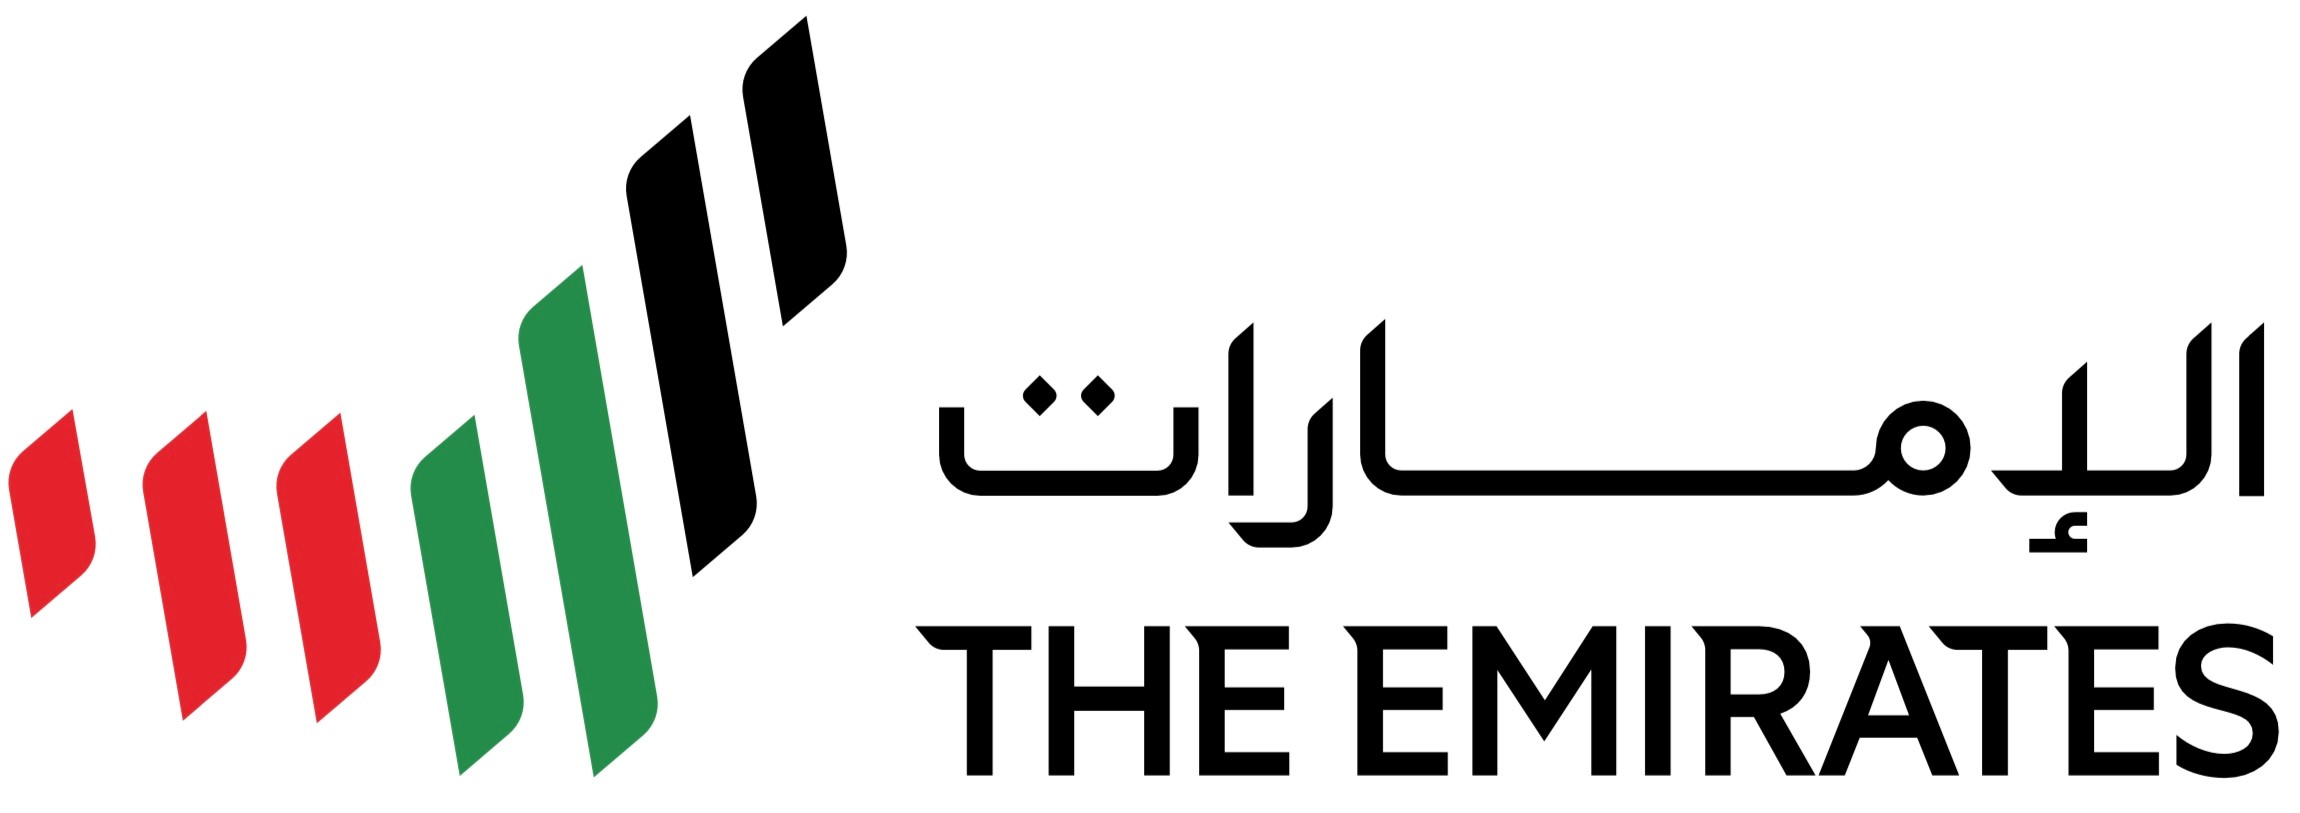 UAE Nation Brand